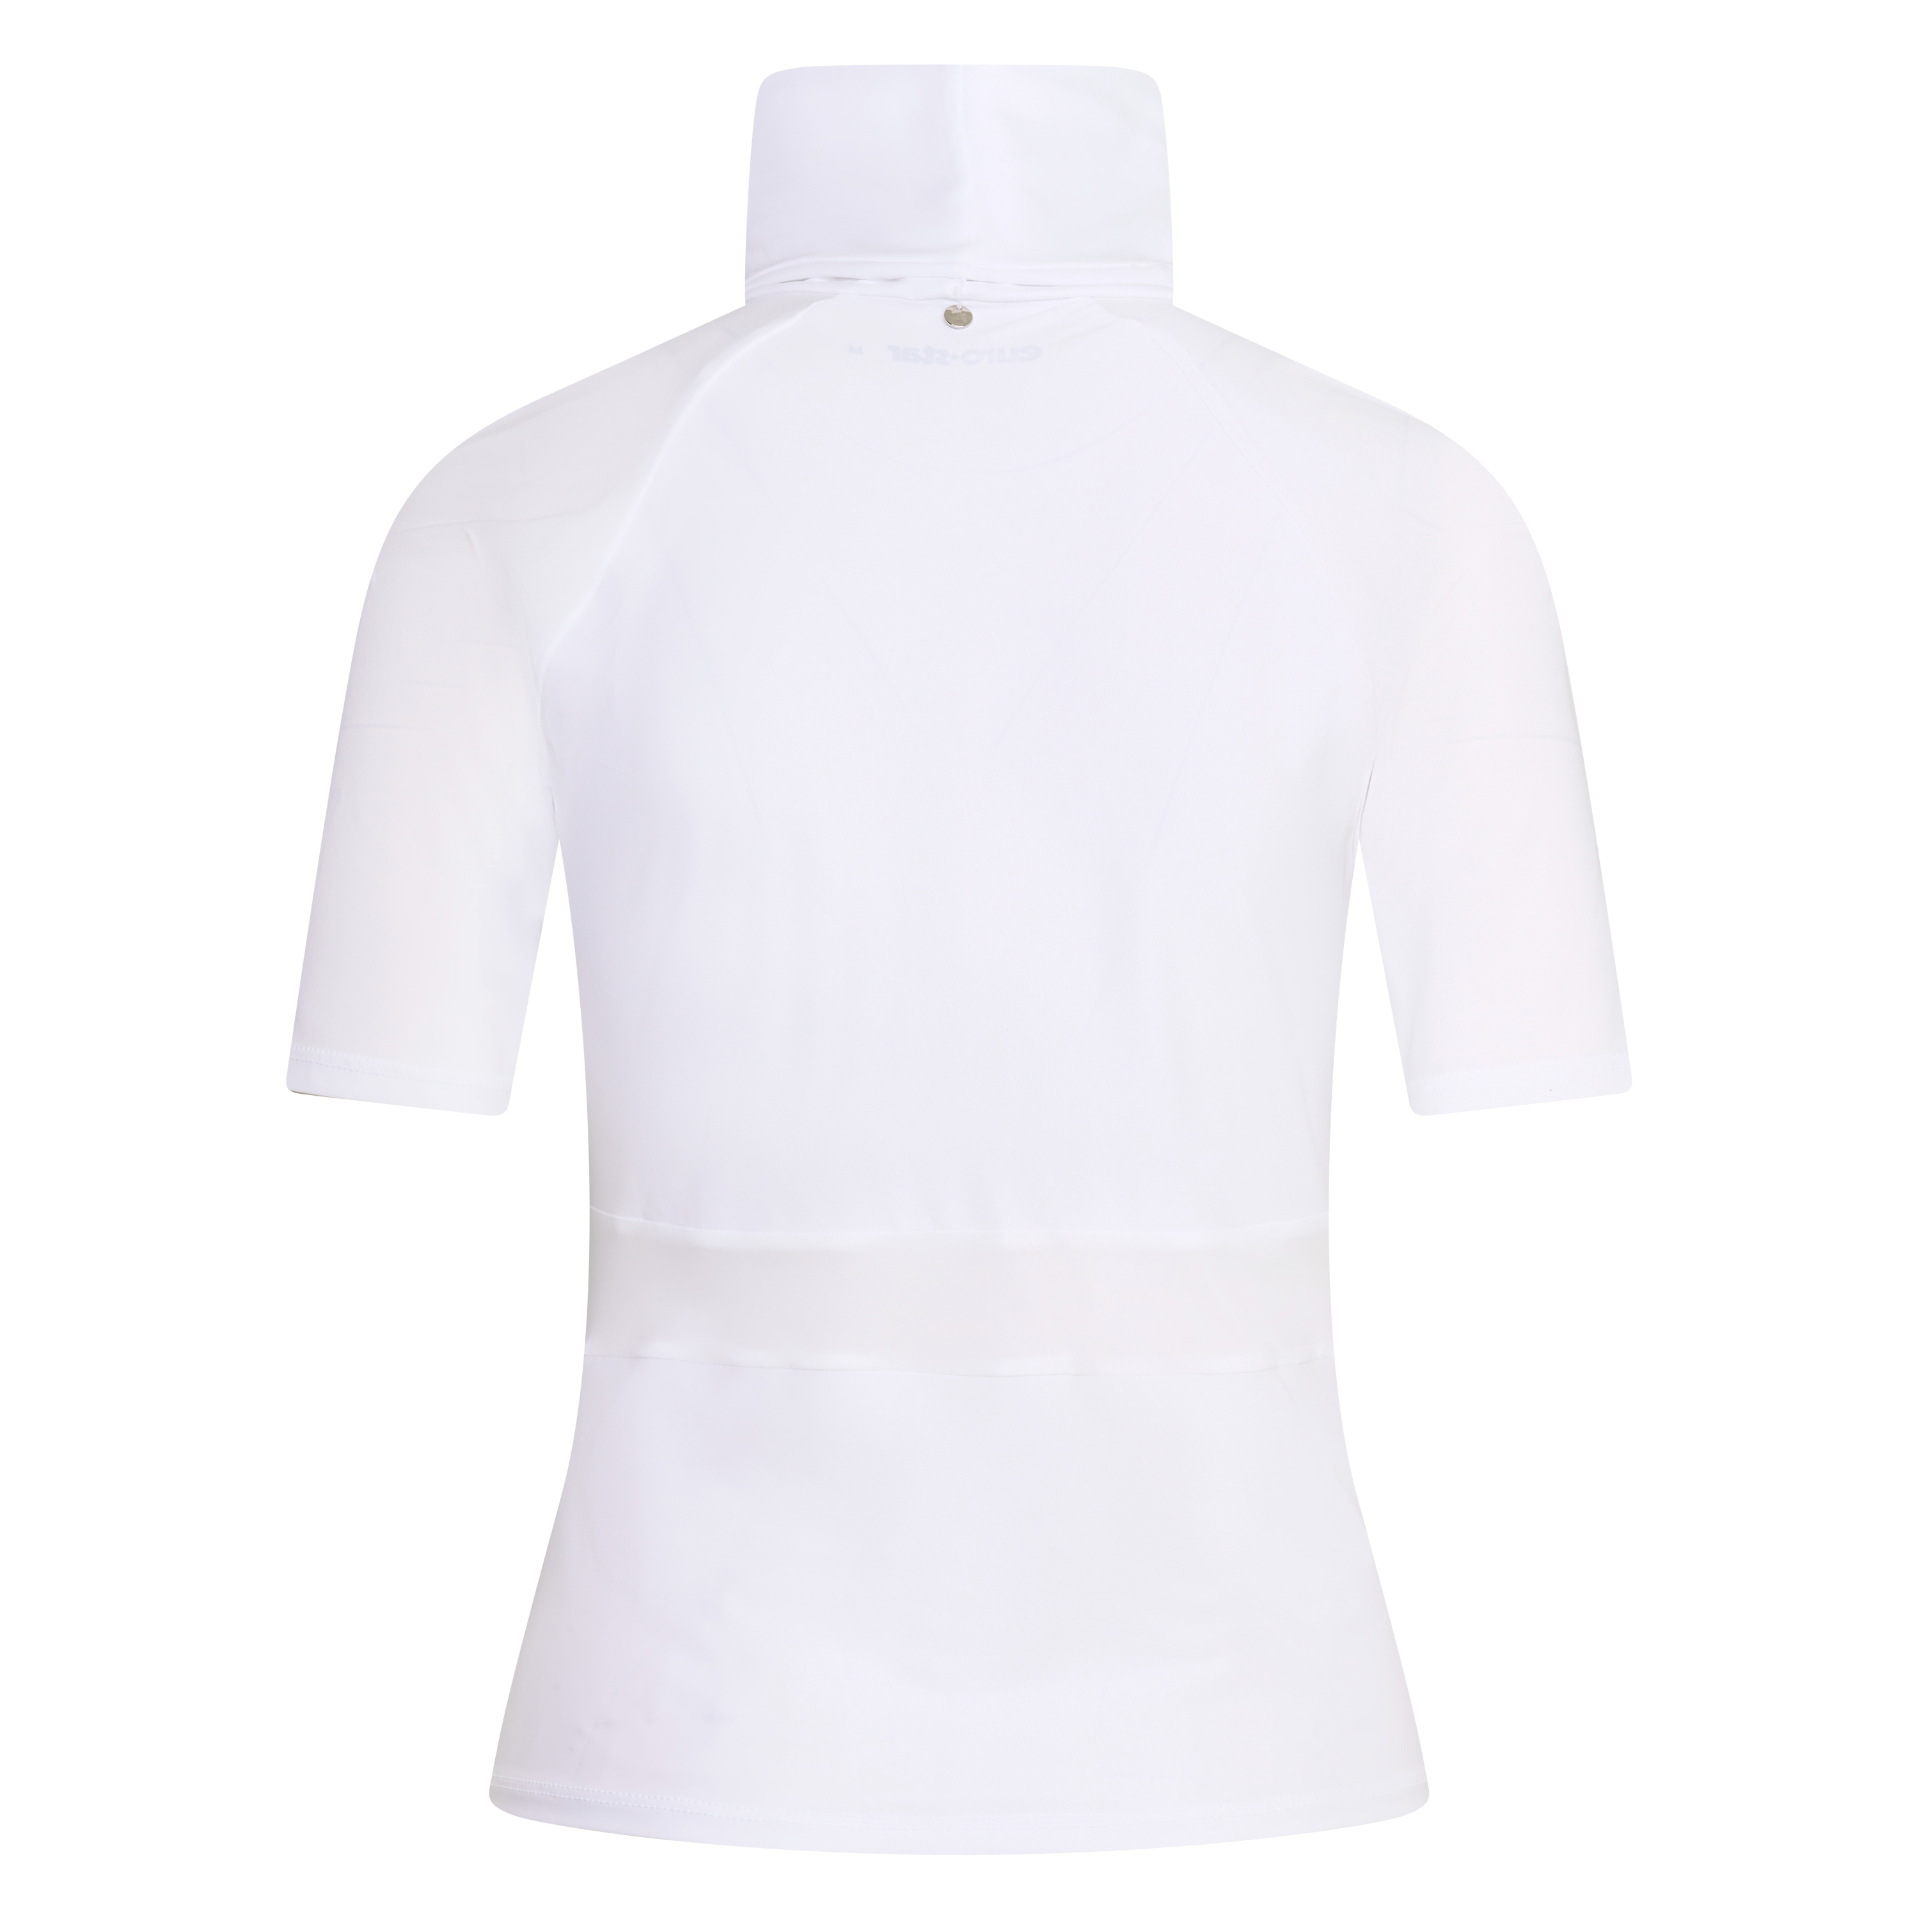 Horseware Kids Ladies Short Sleeve EMMA COMPETITION Show TOP Shirt White ALL SIZ 